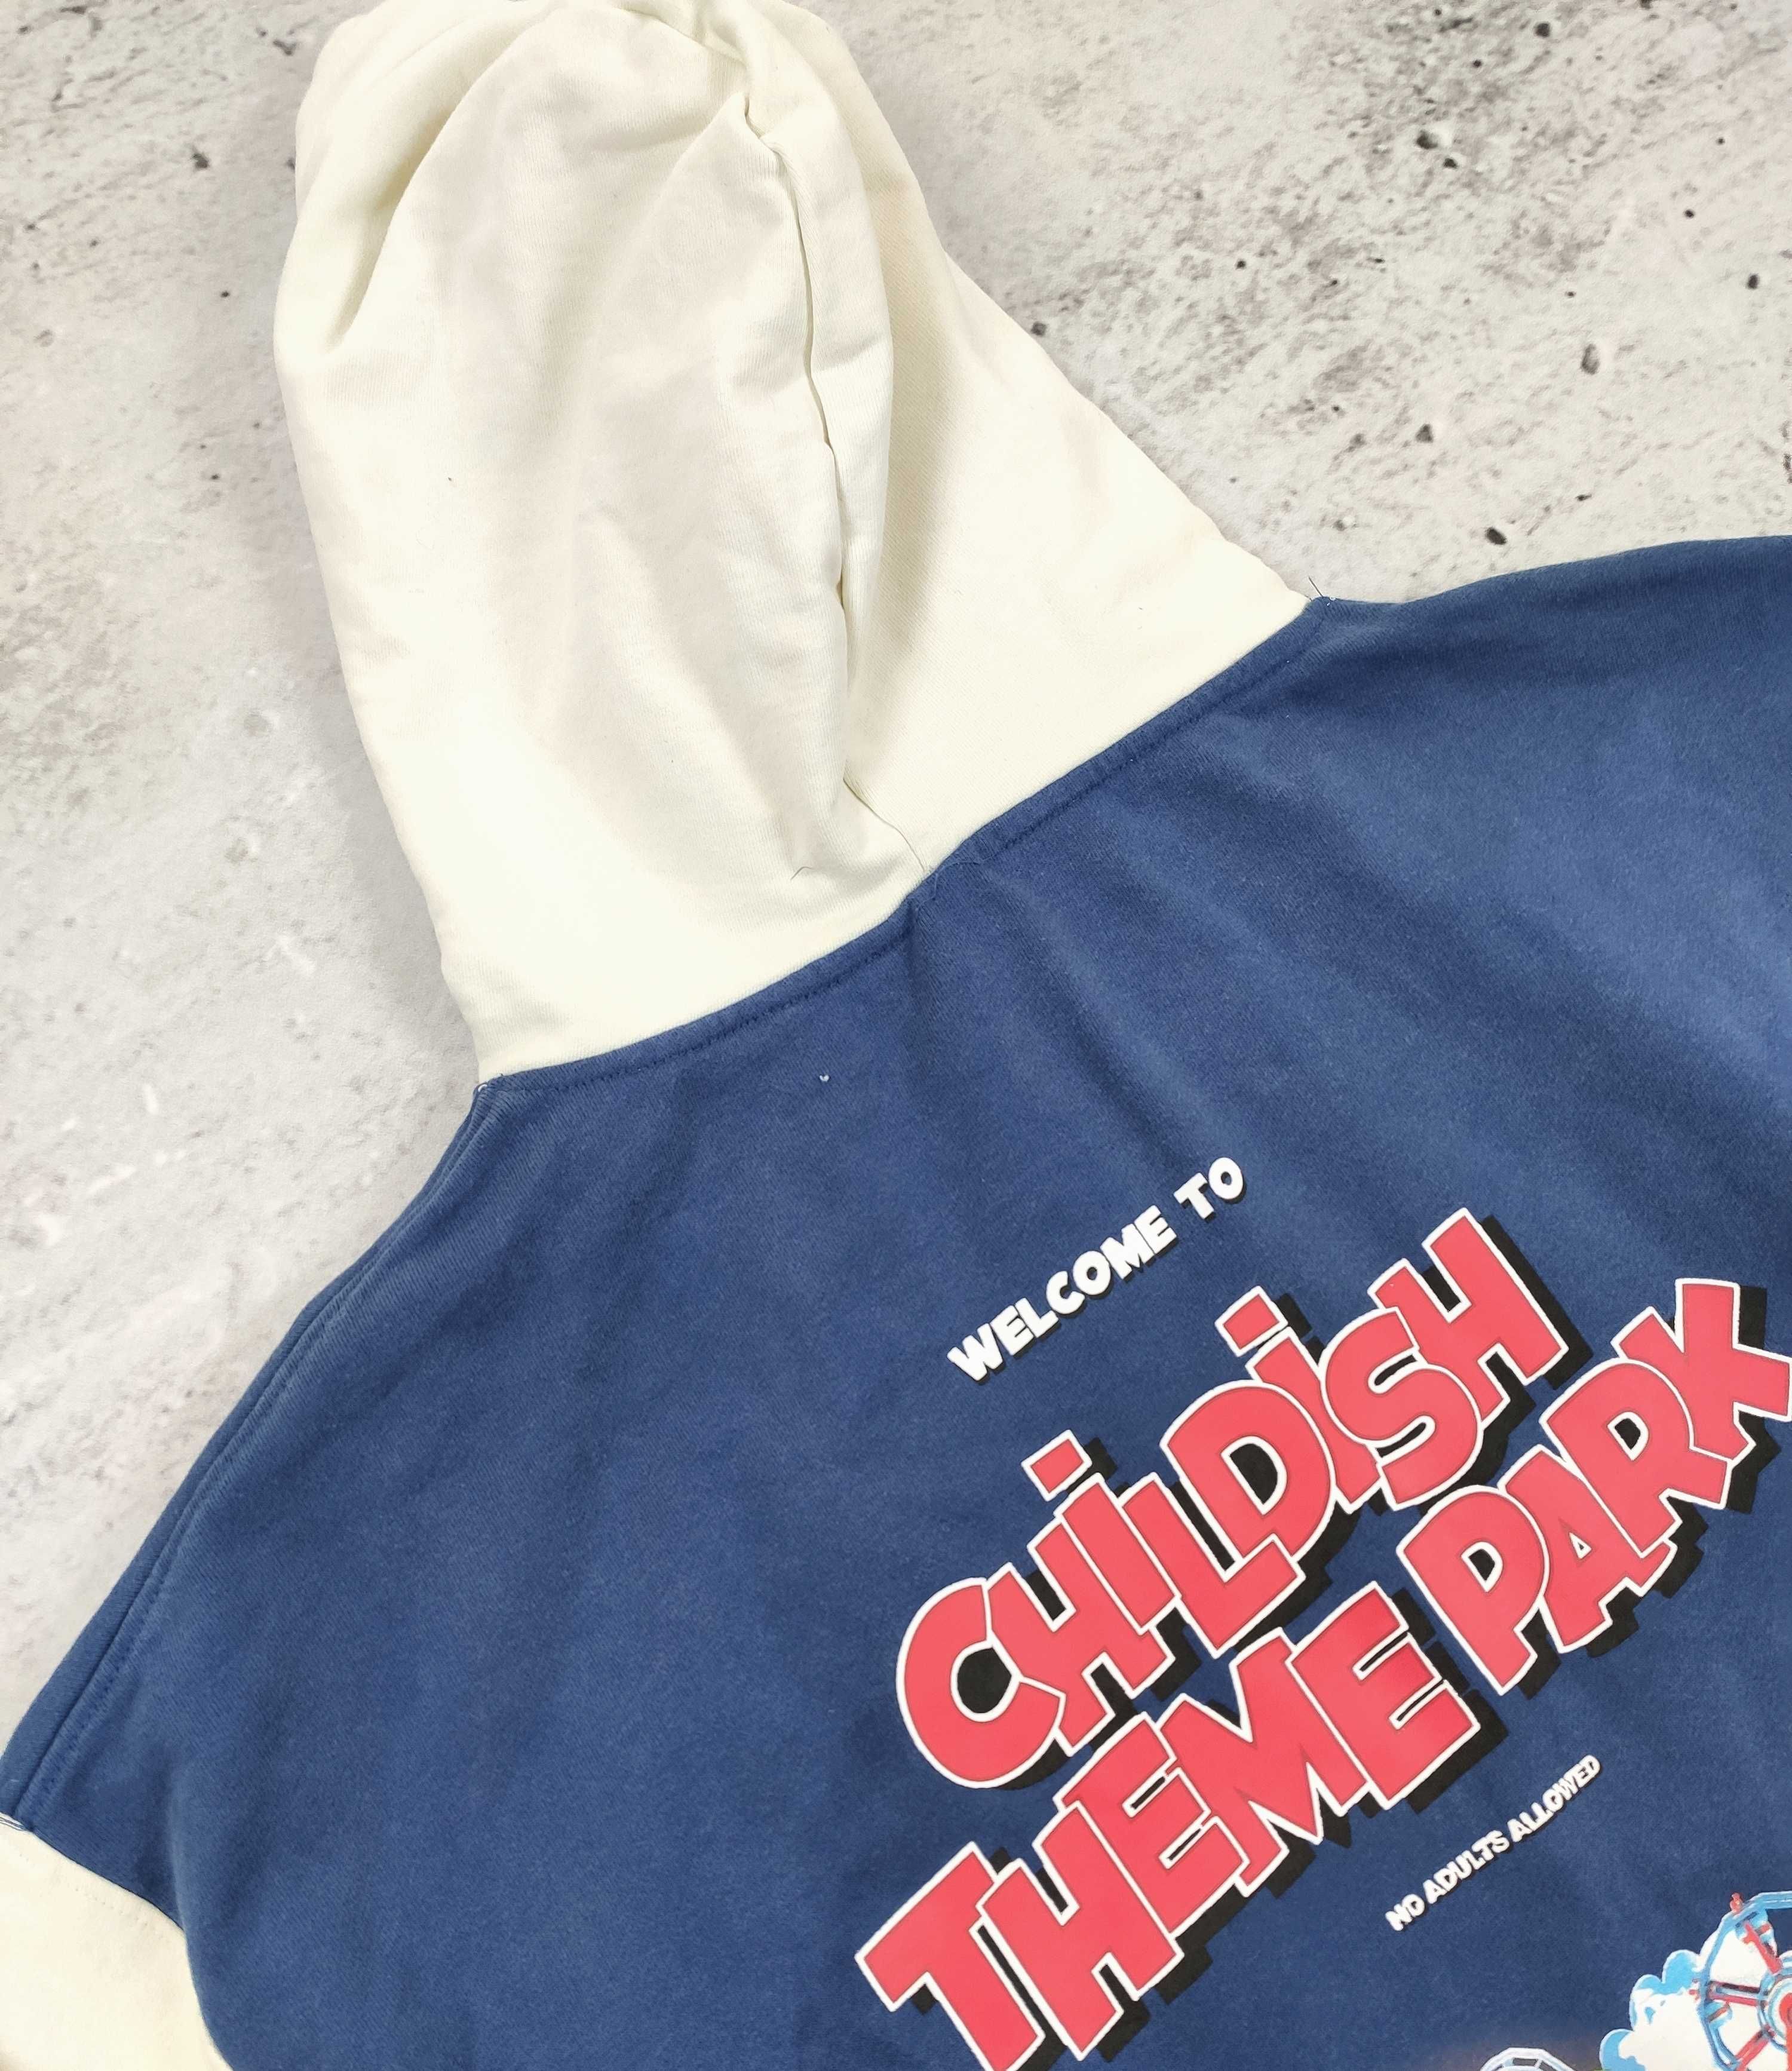 Vintage bluza Childish Theme Park boxy hoodie 90s r. L